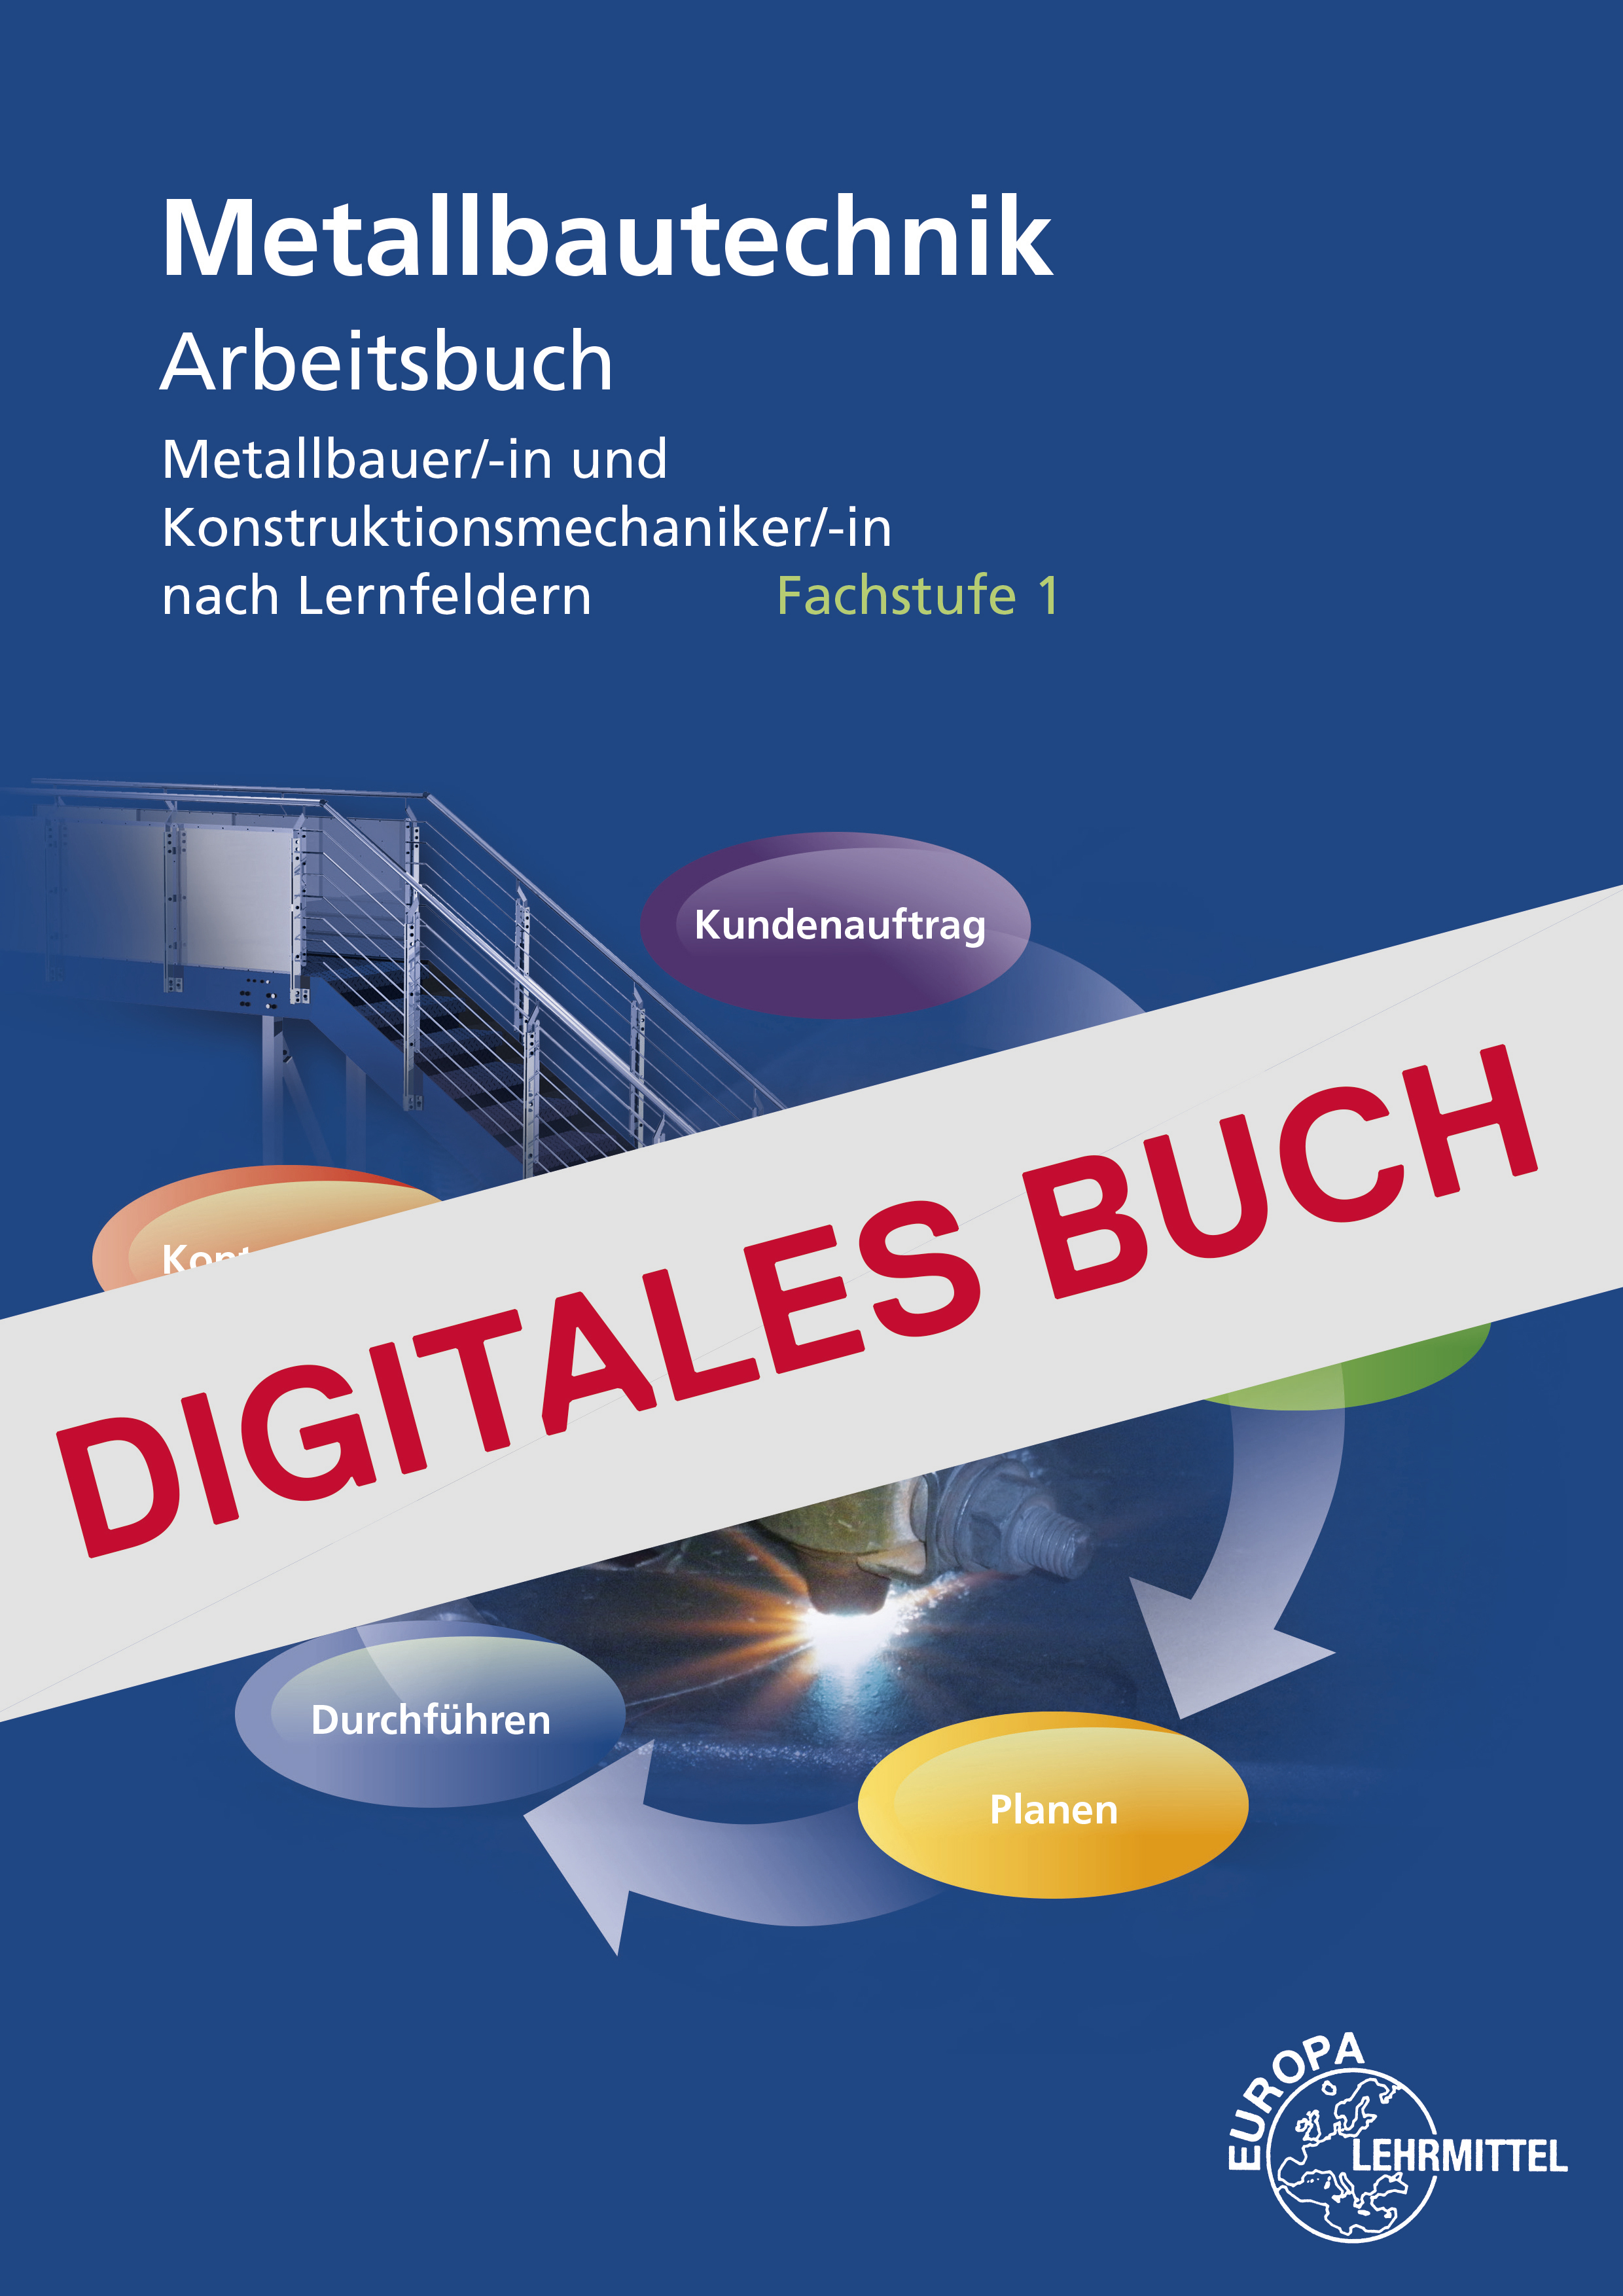 Arbeitsbuch Metallbautechnik Fachstufe 1 - Digitales Buch